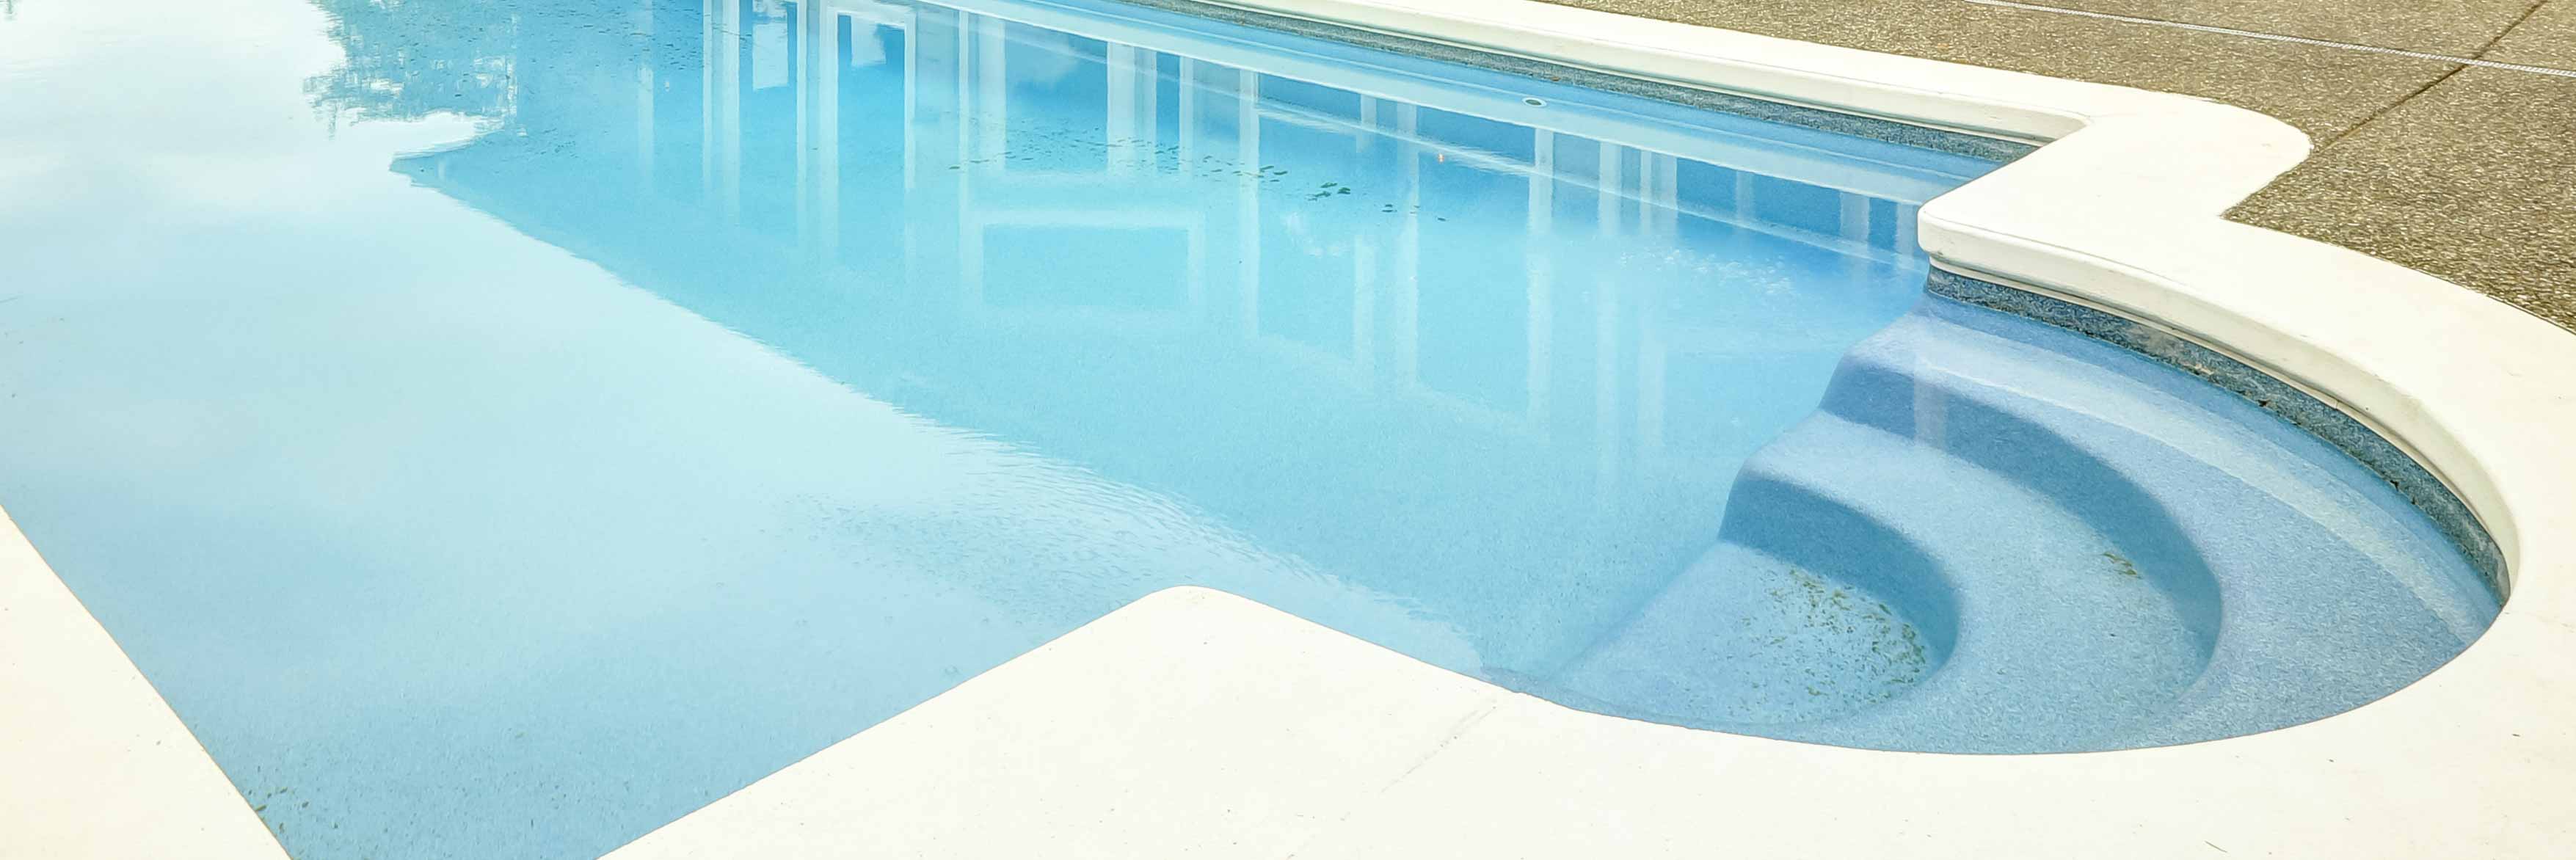 Pool Resurfacing Cost